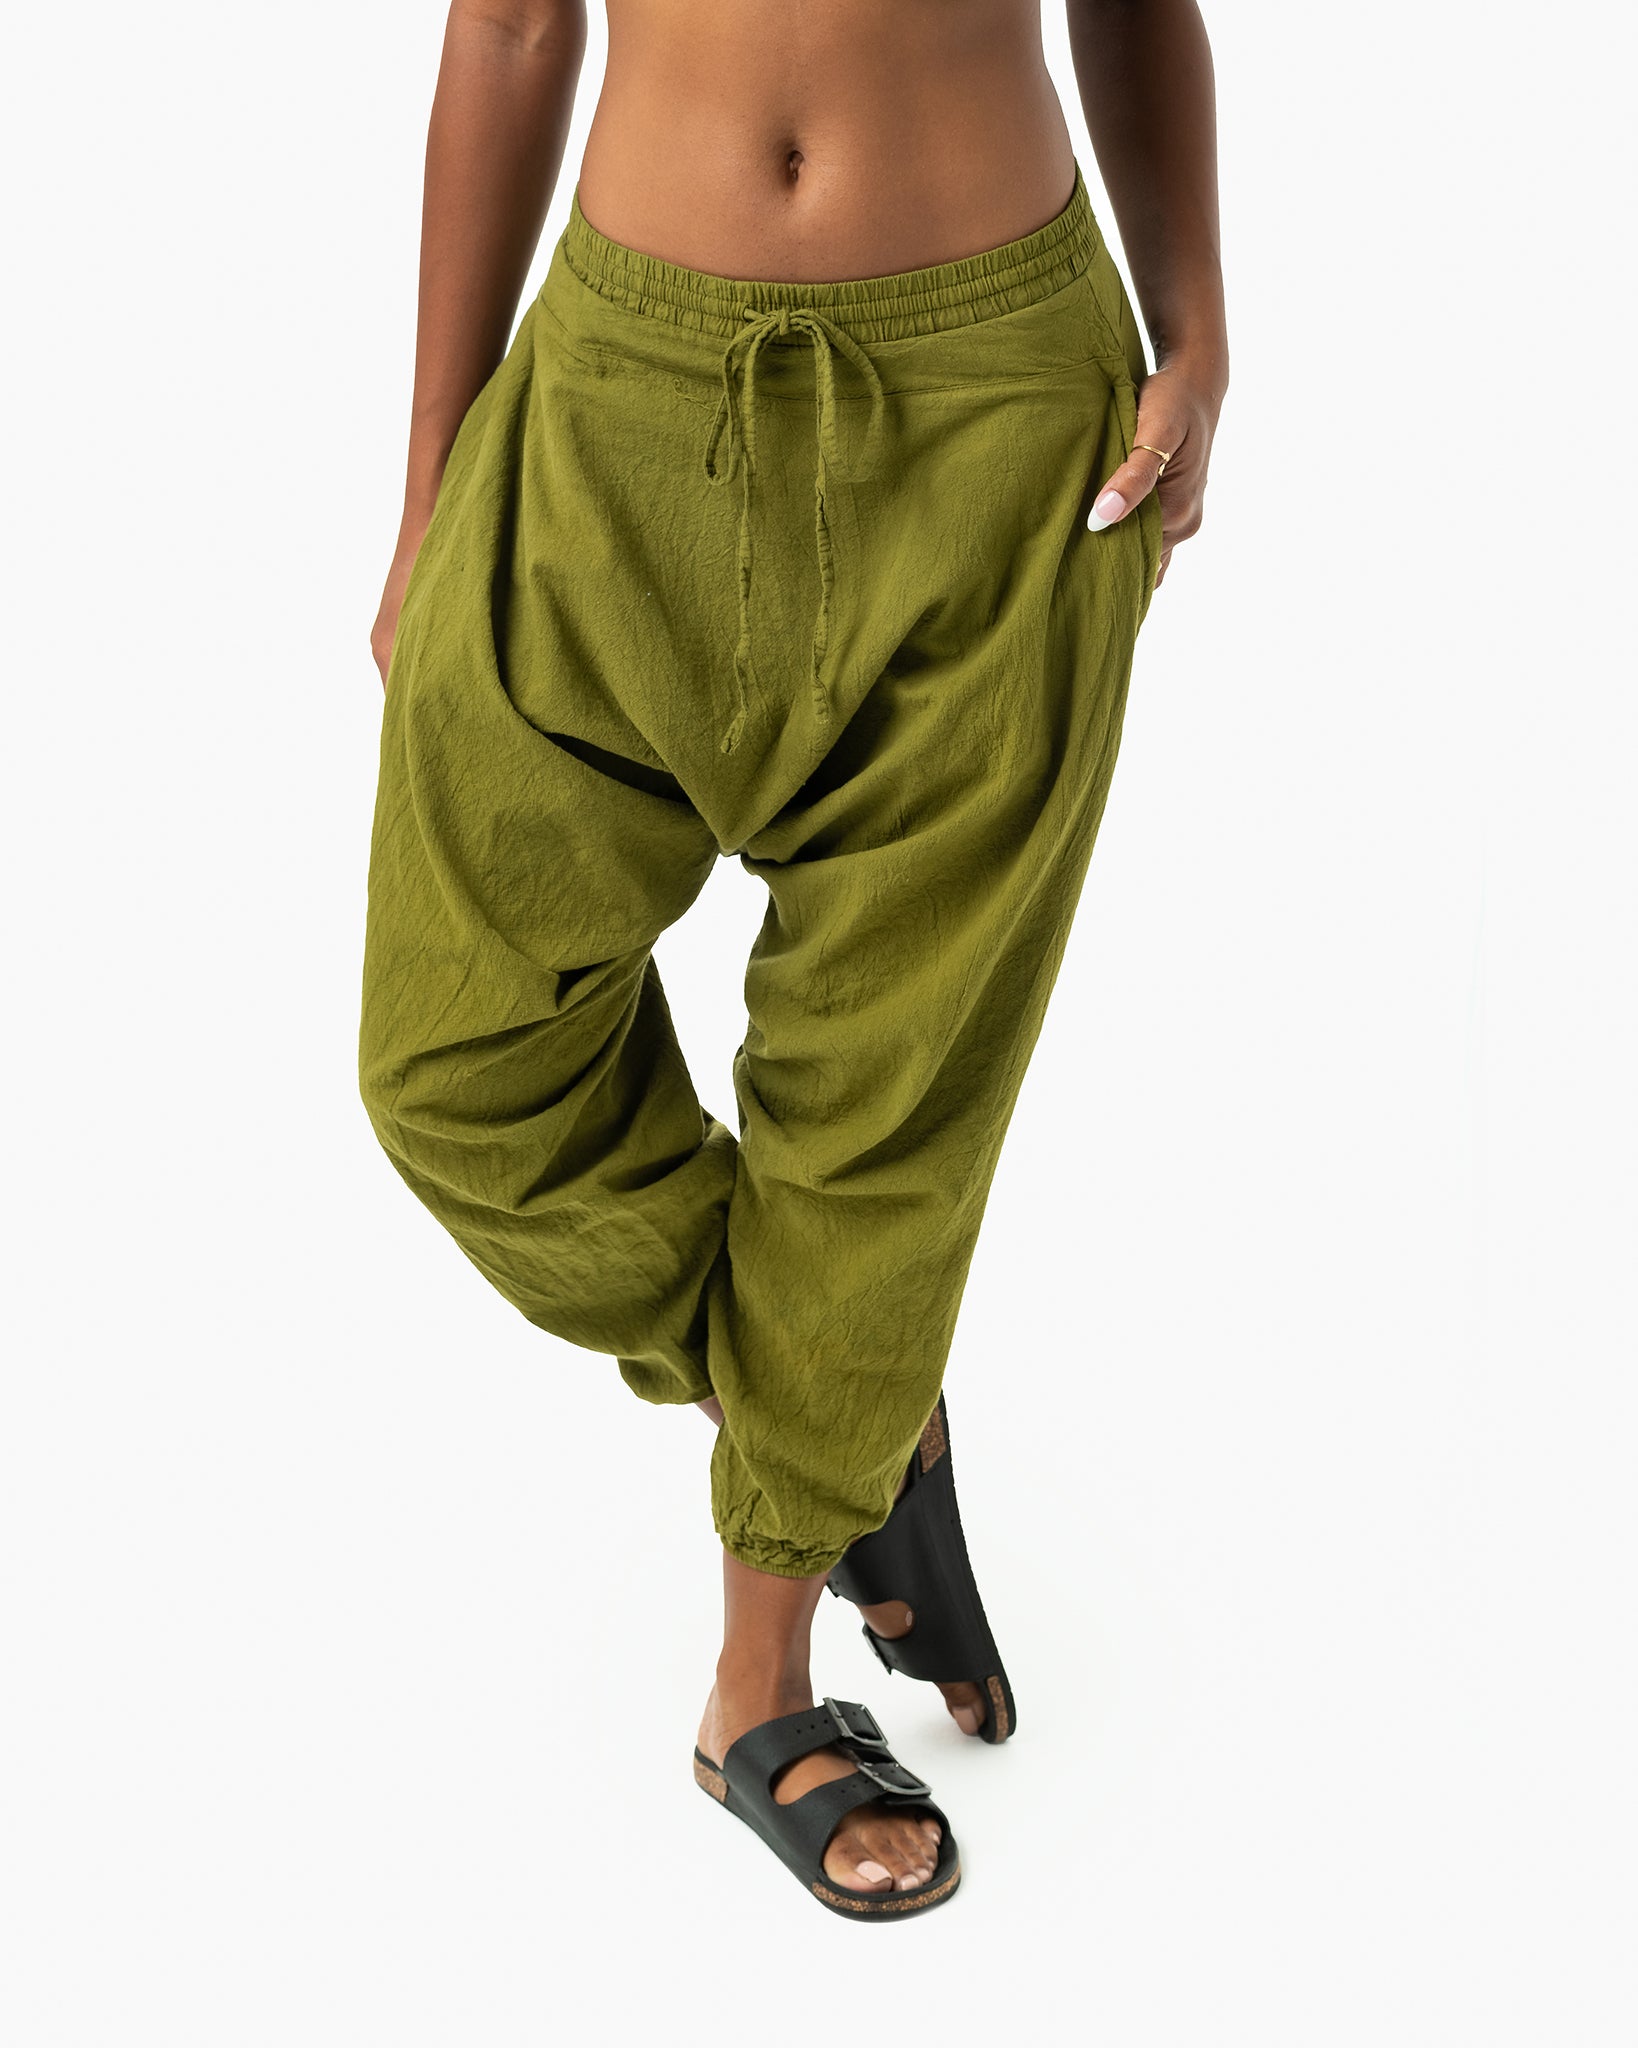 Women's Yoga Pants, Drawstring Harem Pants, Baggy Pant, Zumba